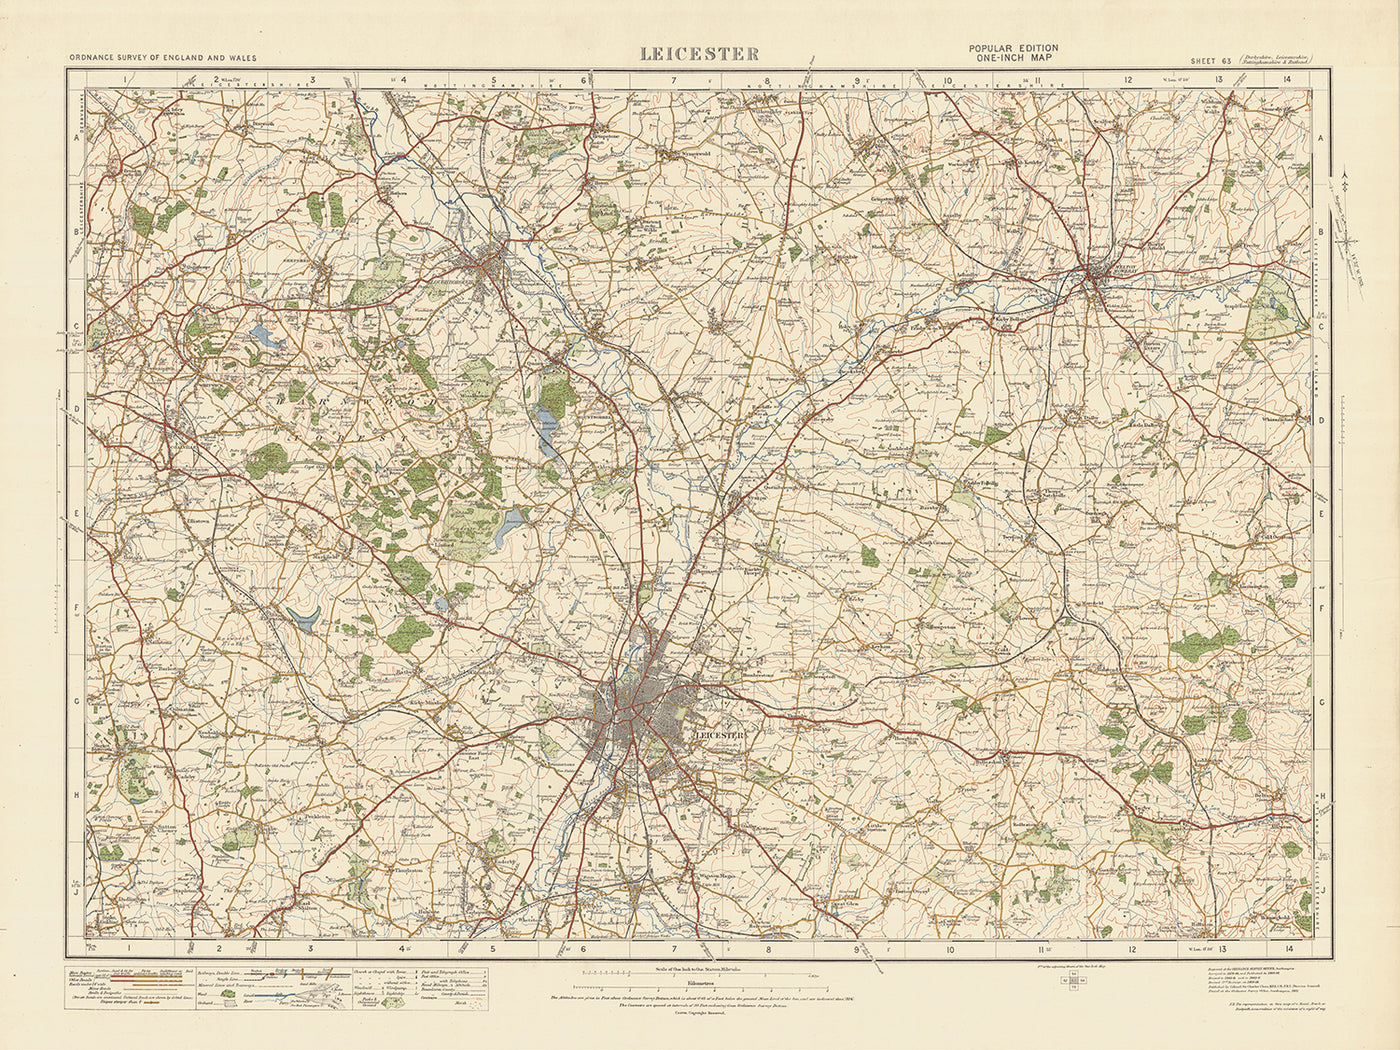 Old Ordnance Survey Map, Blatt 63 – Leicester, 1925: Loughborough, Coalville, Melton Mowbray, Wigston, Shepshed